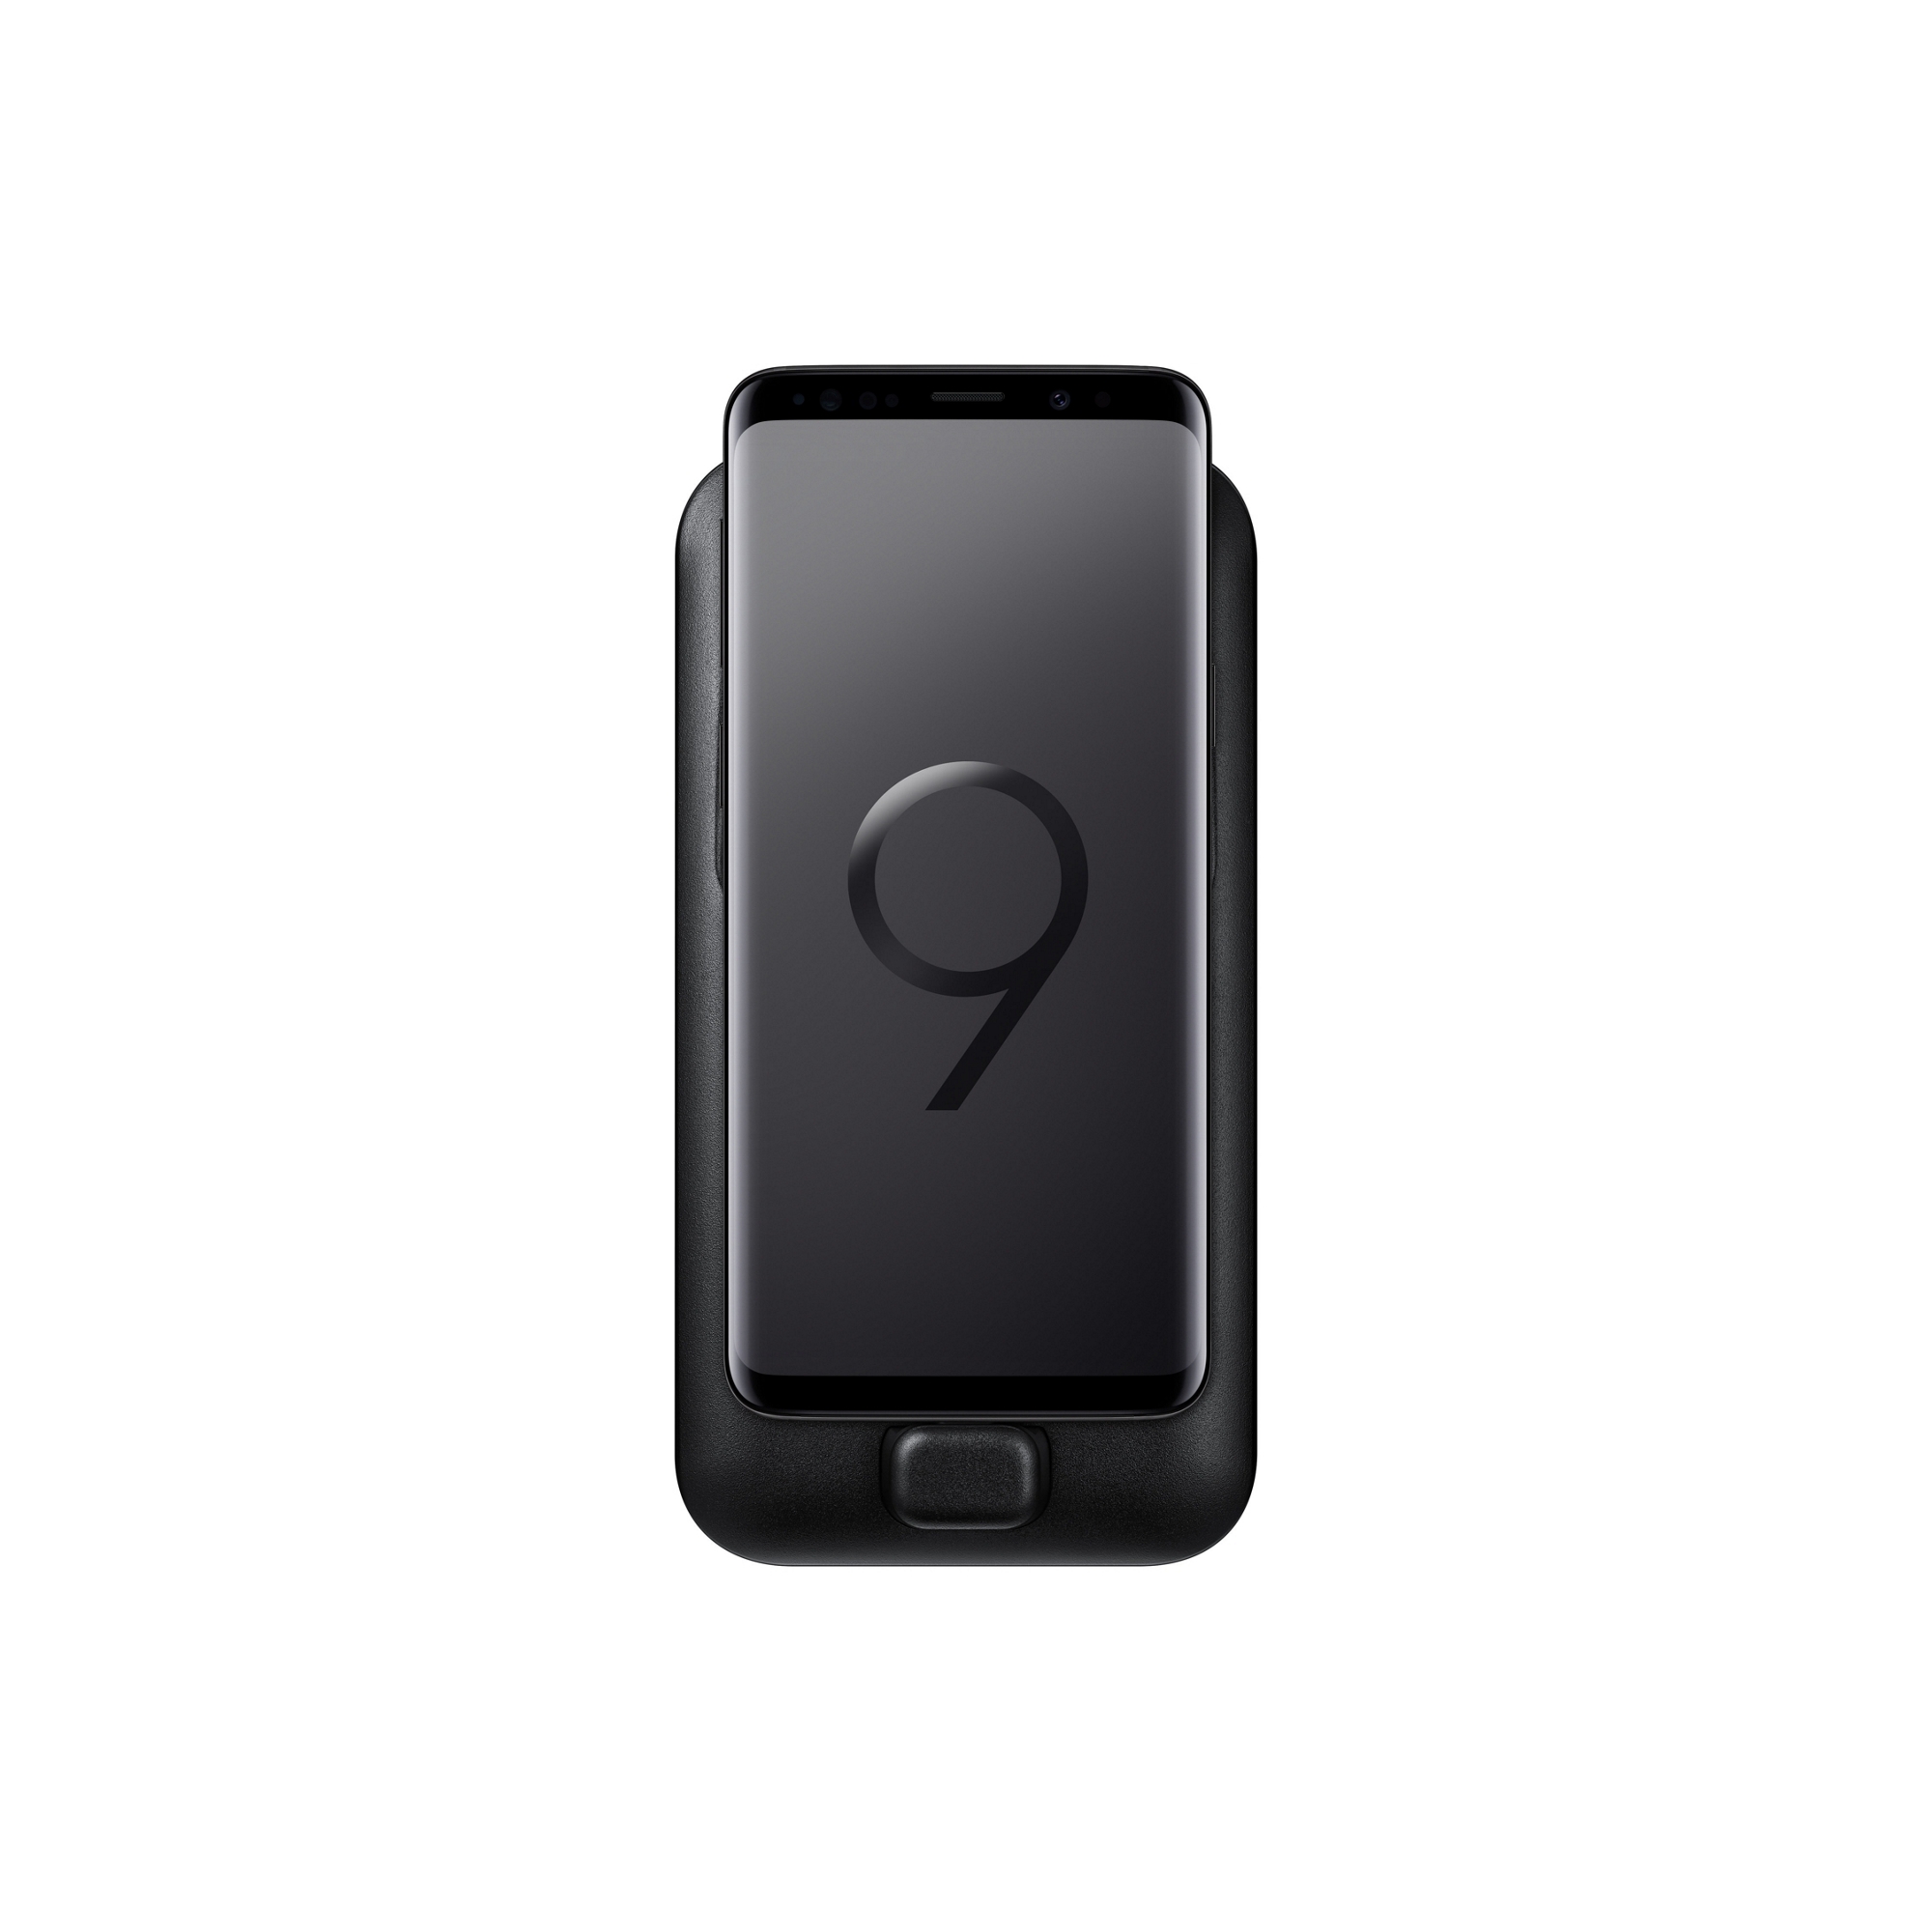 DeX Pad Mobile Accessories - EE-M5100TBEGUS | Samsung US